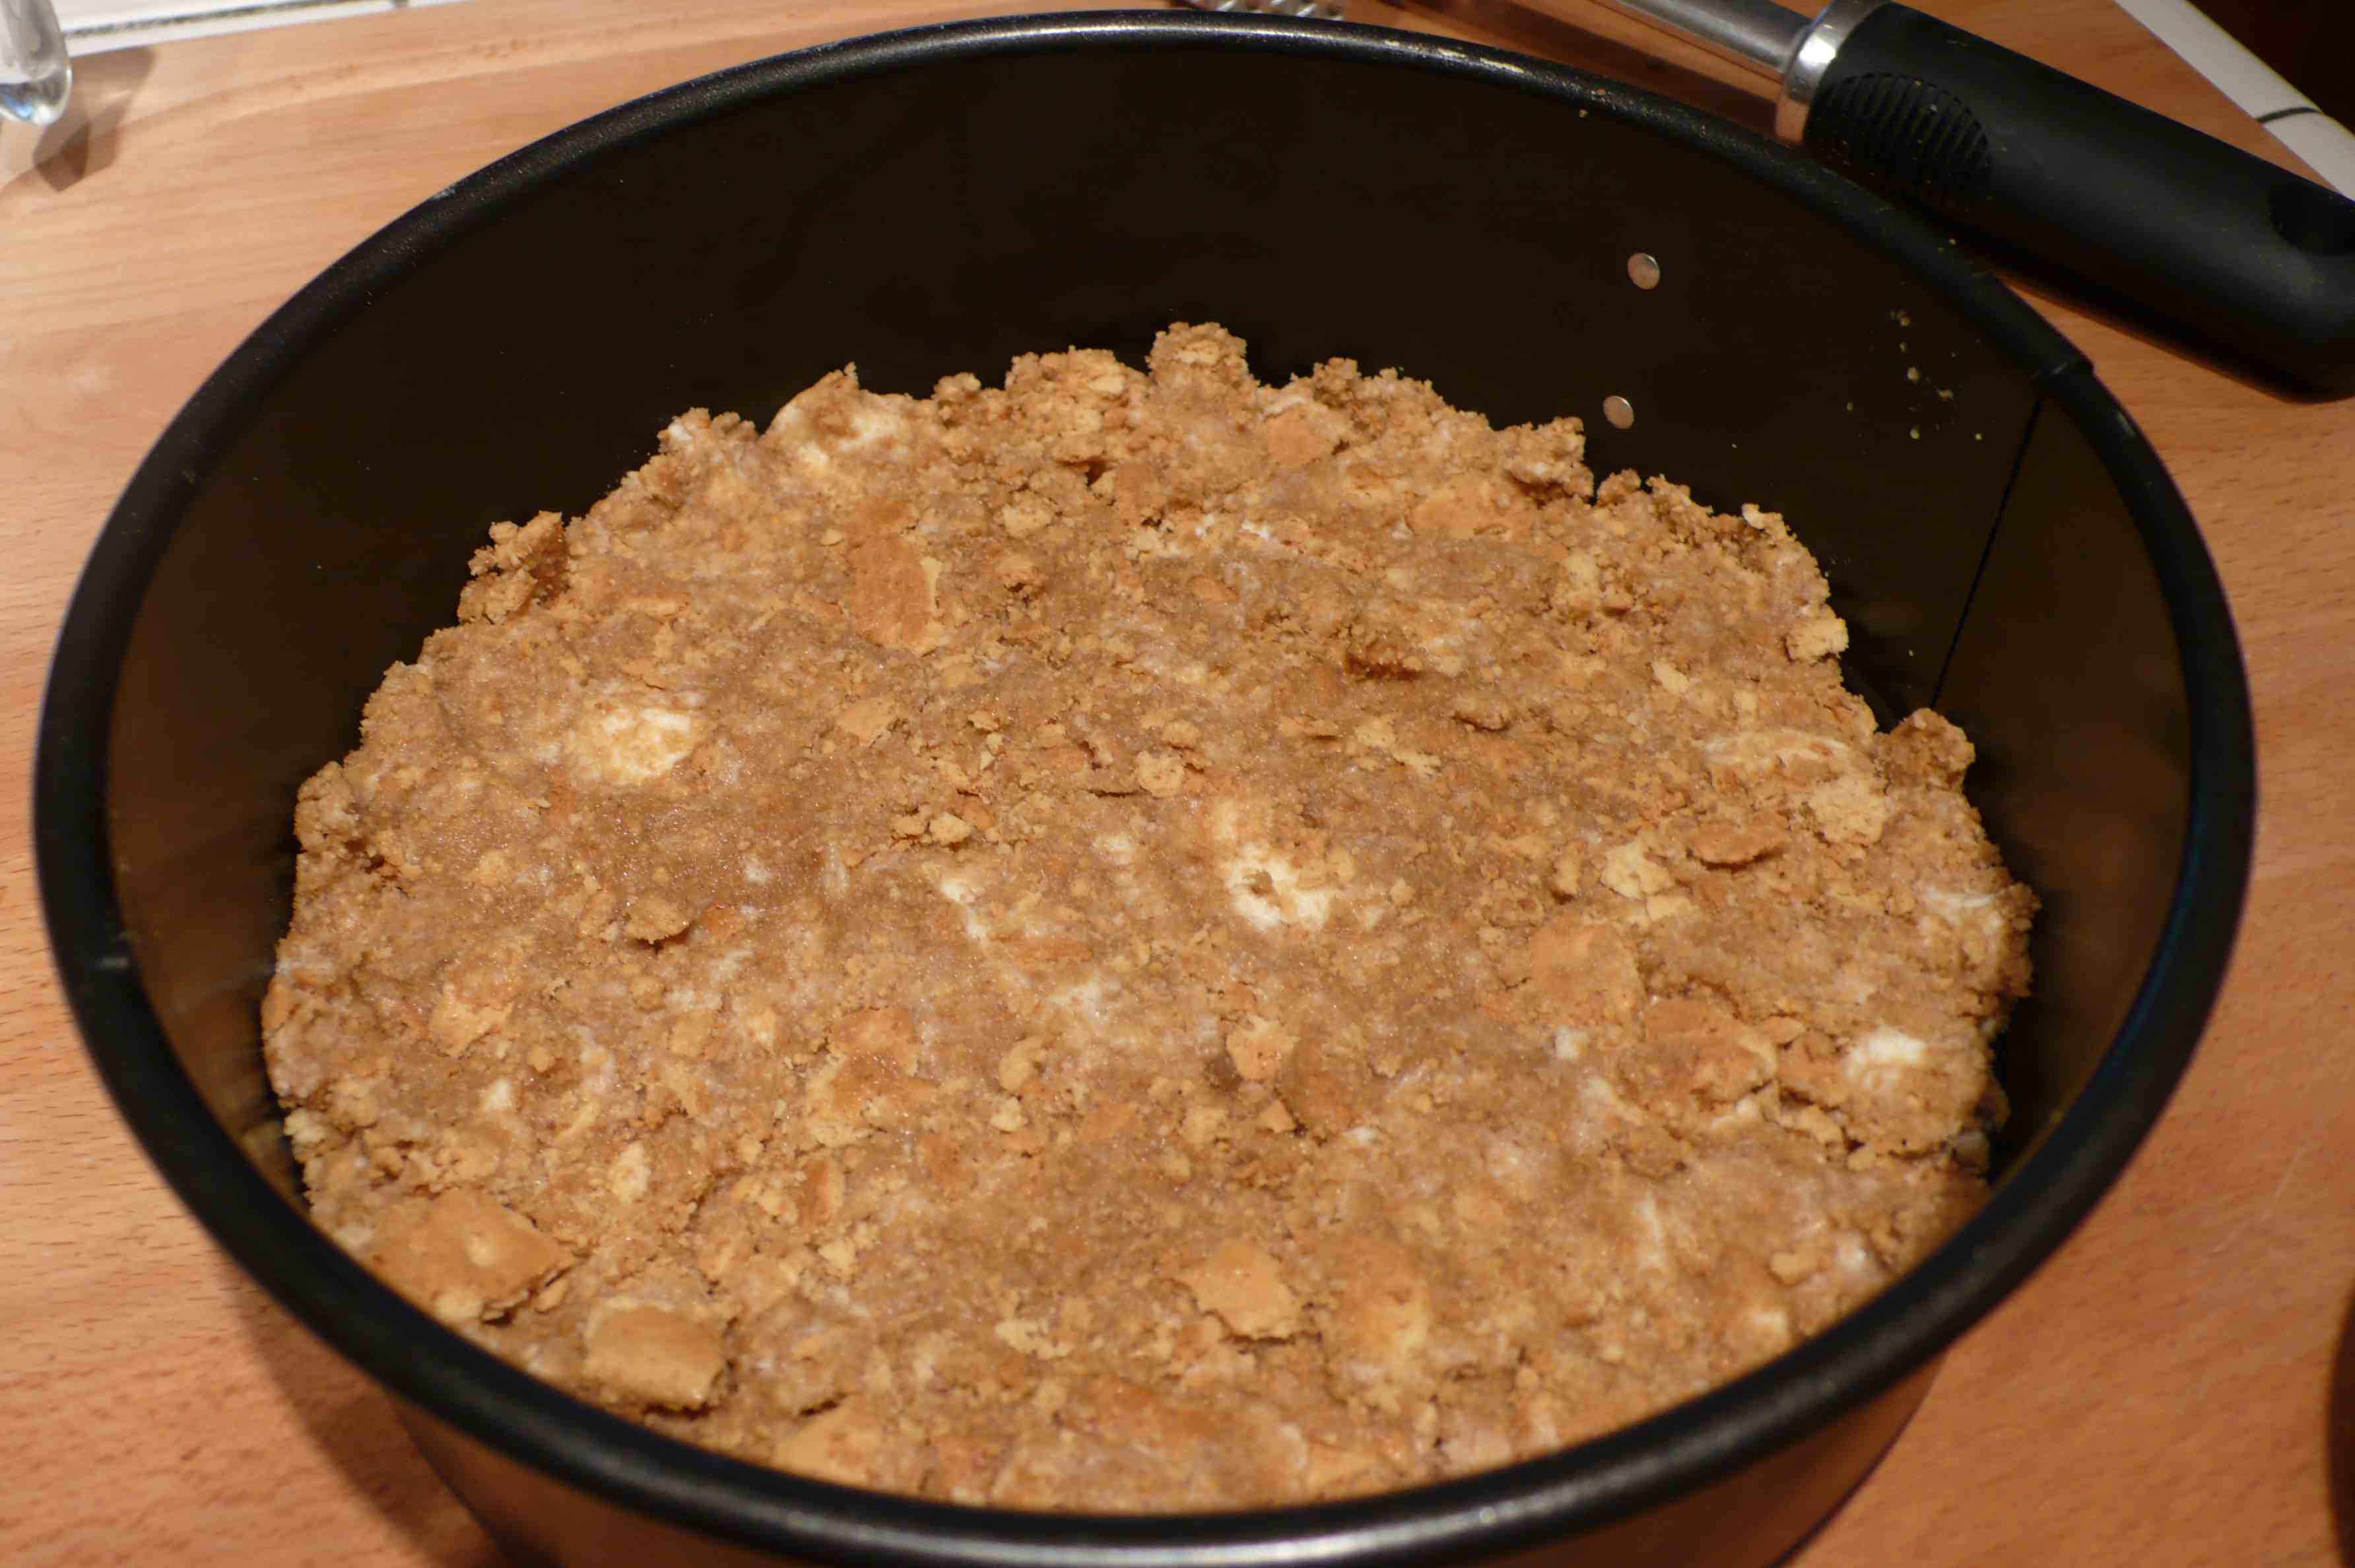 Crust in springform pan